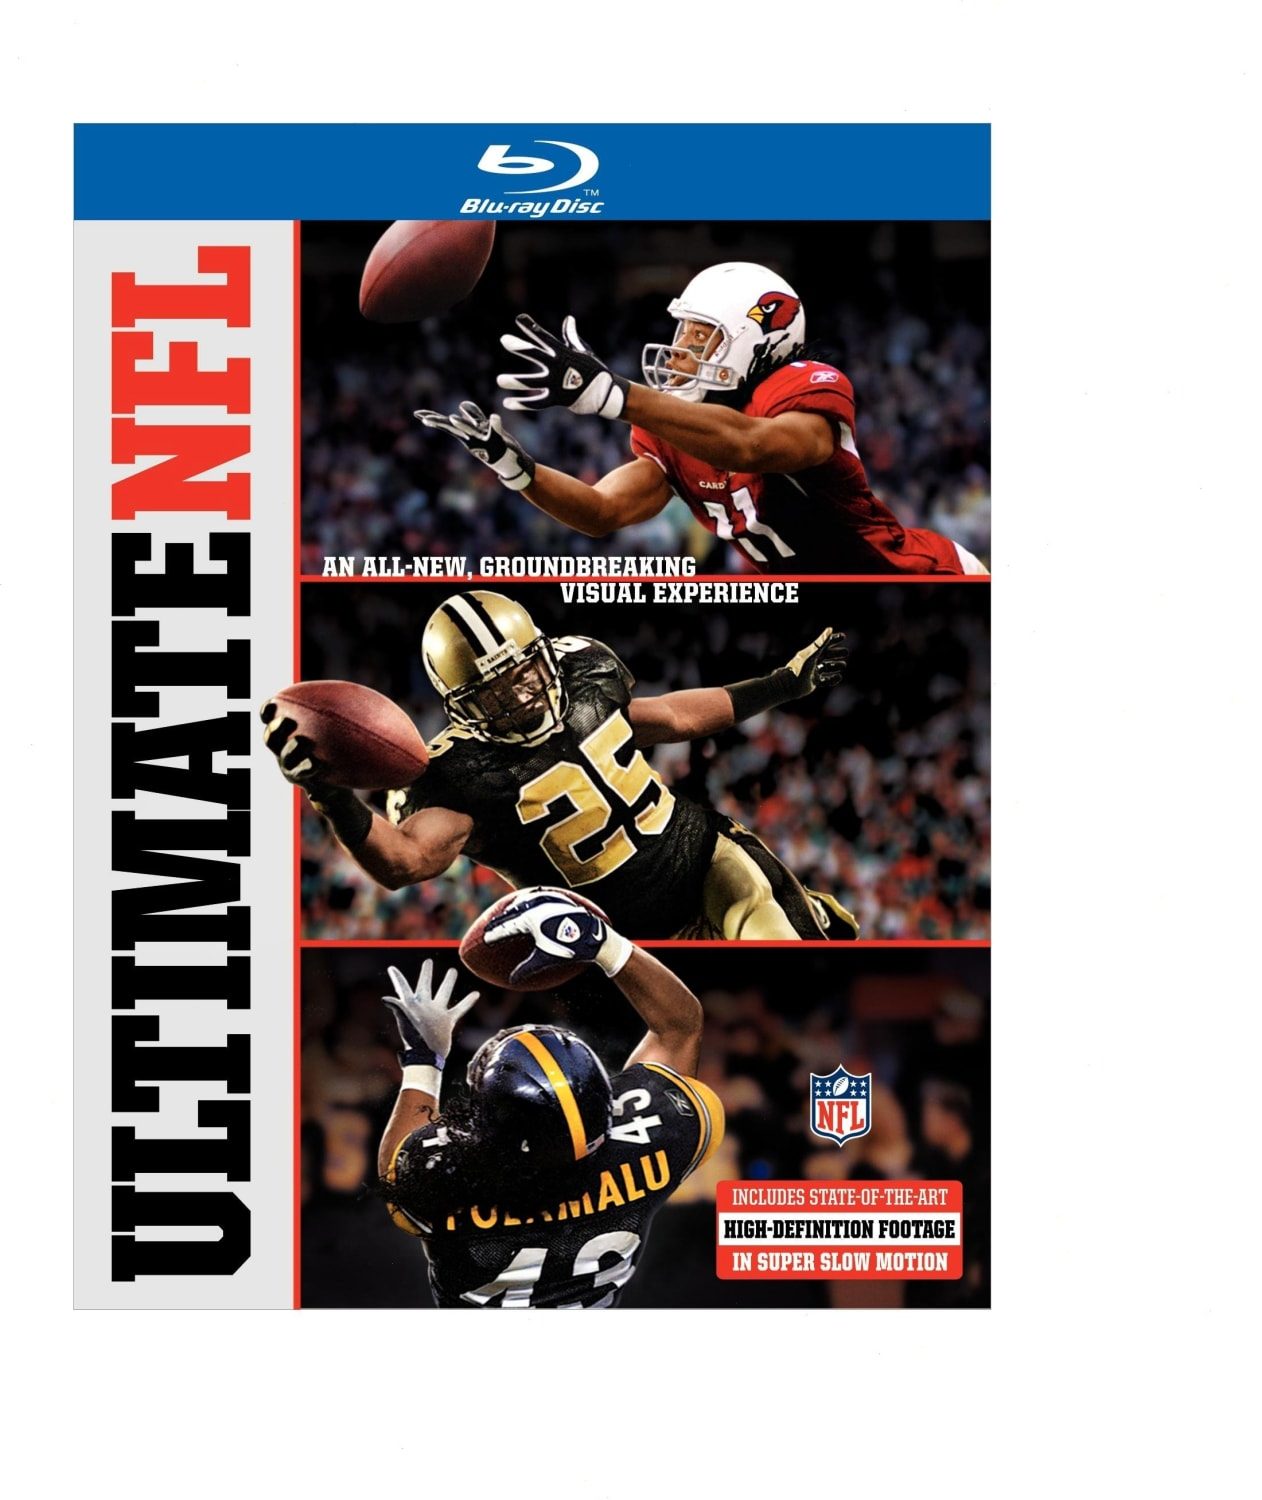 NFL Ultimate (Blu-ray) on MovieShack